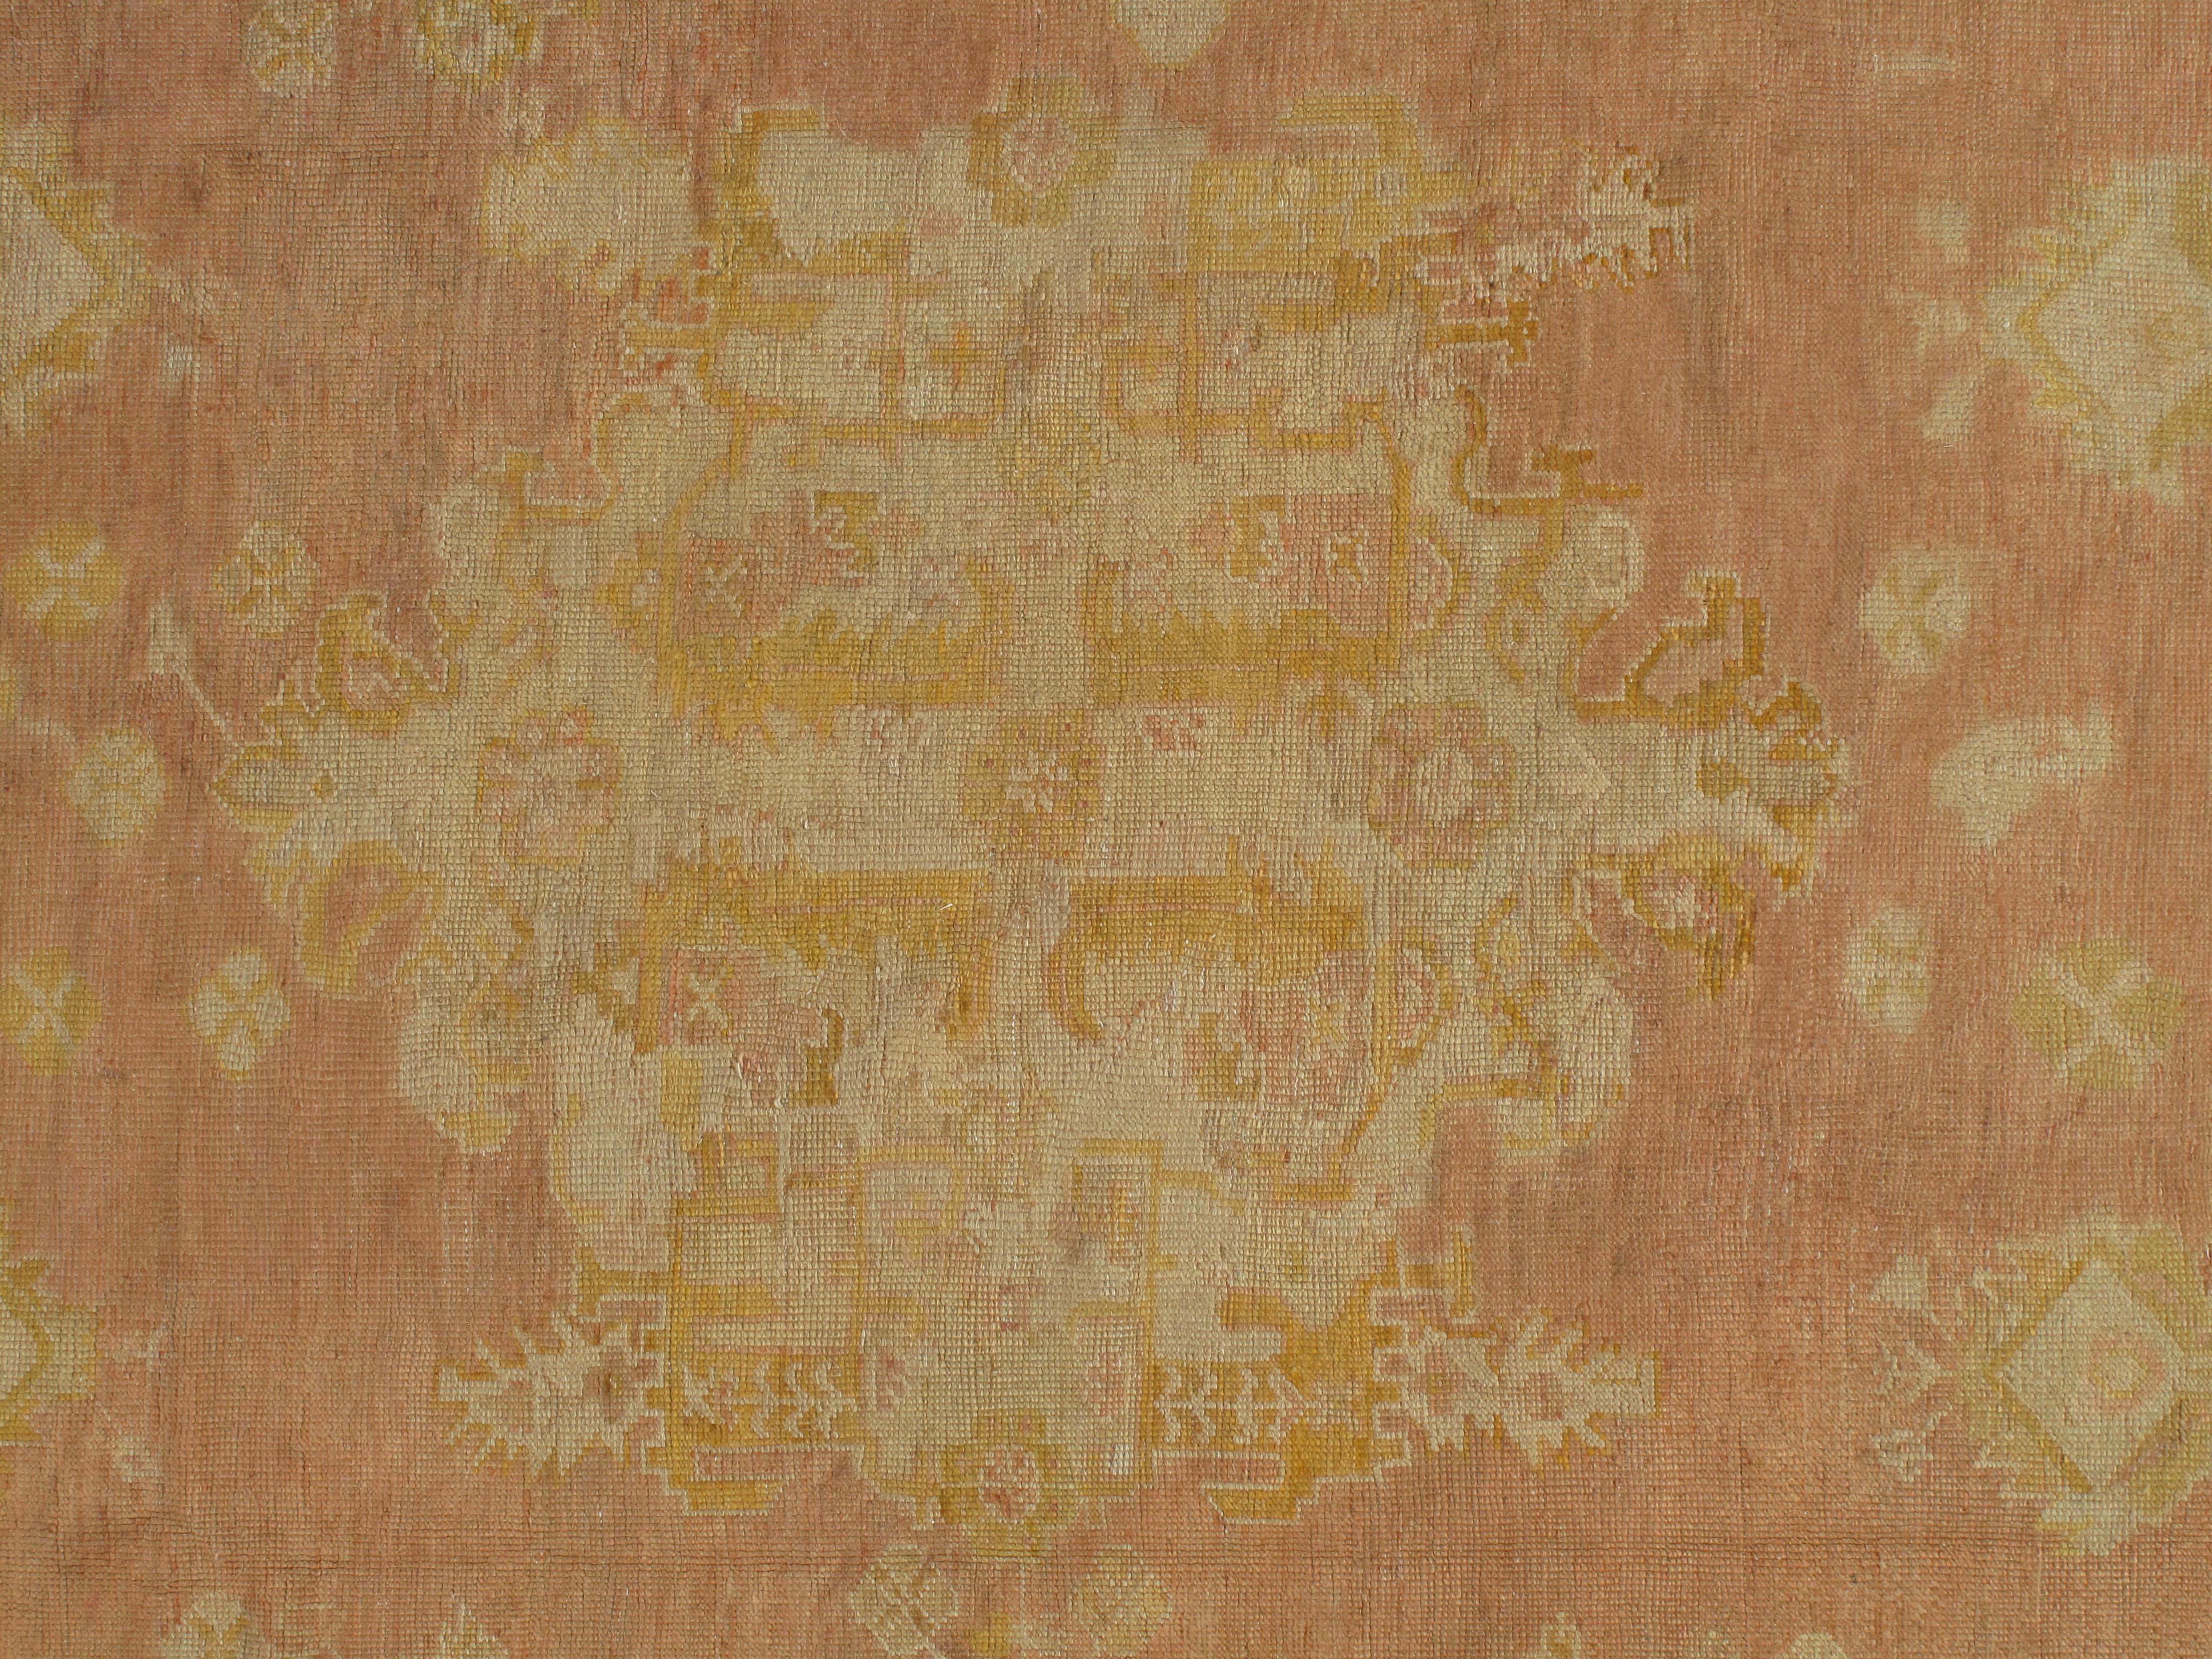 Antique Oushak Carpet, Handmade Turkish Oriental Rug, Beige, Taupe, Soft Coral 7